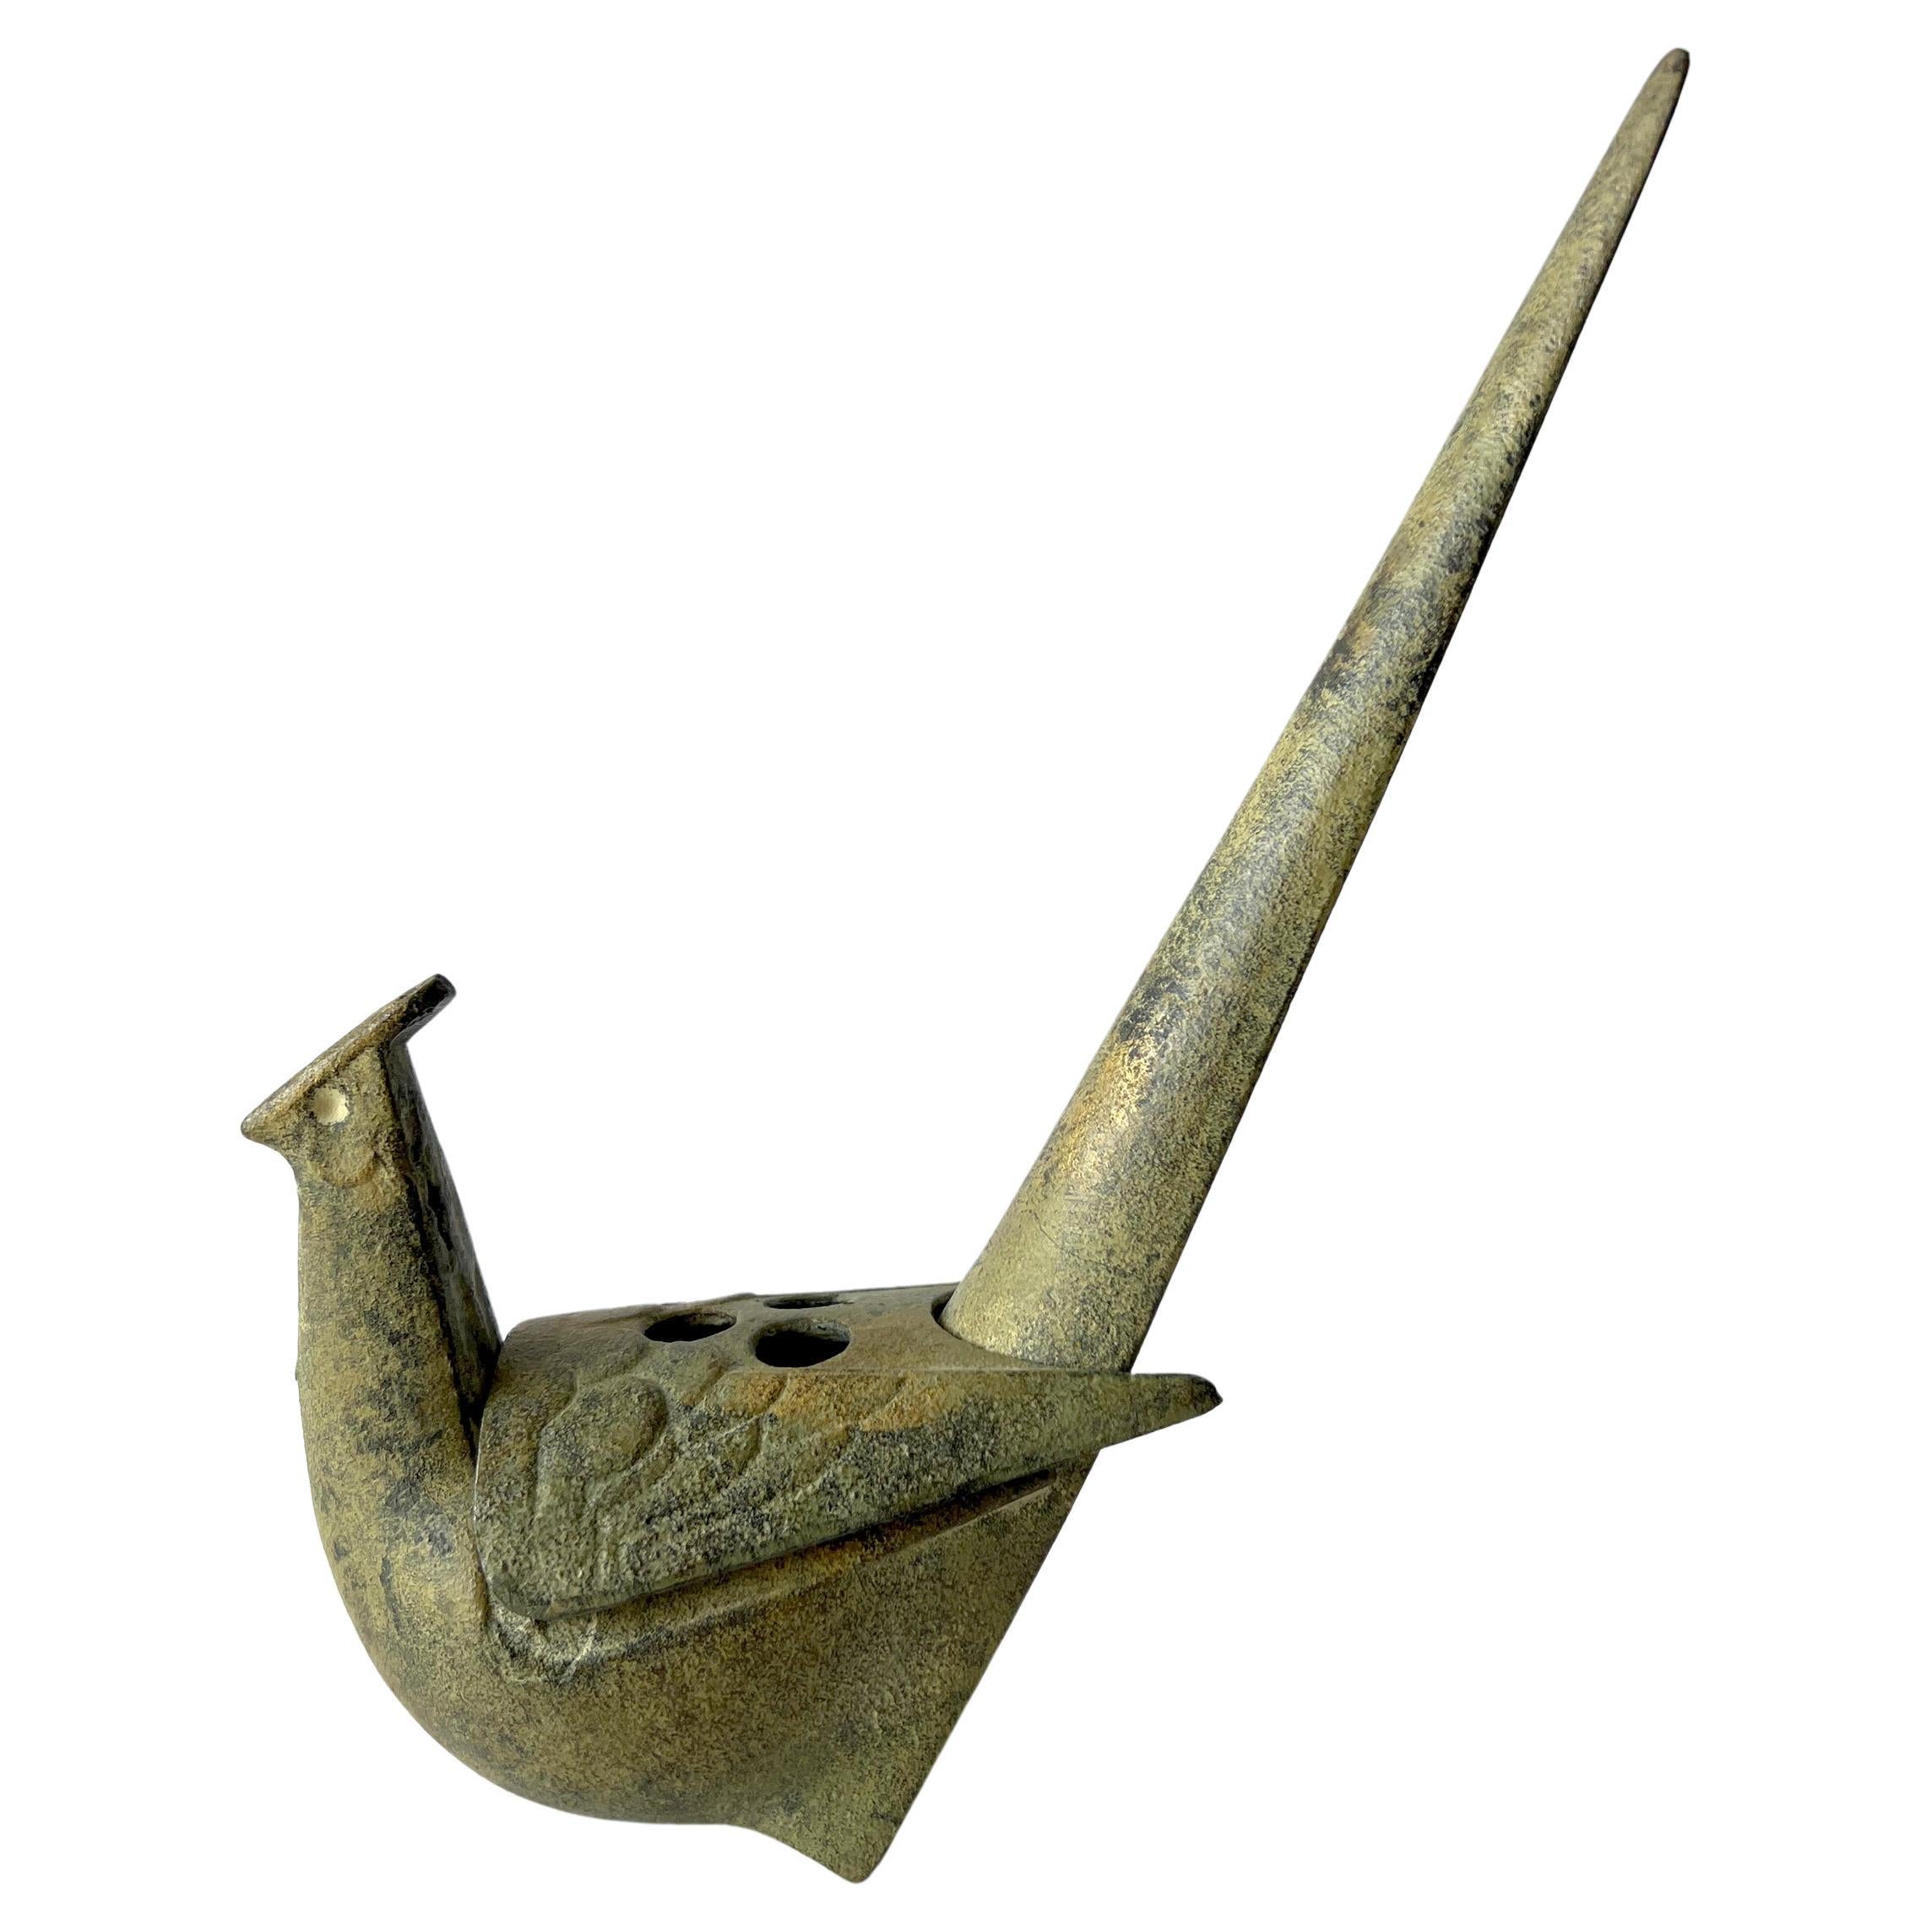 Cast iron Koro bird incense burner or sculpture, made in Japan. Piece measures 9.5